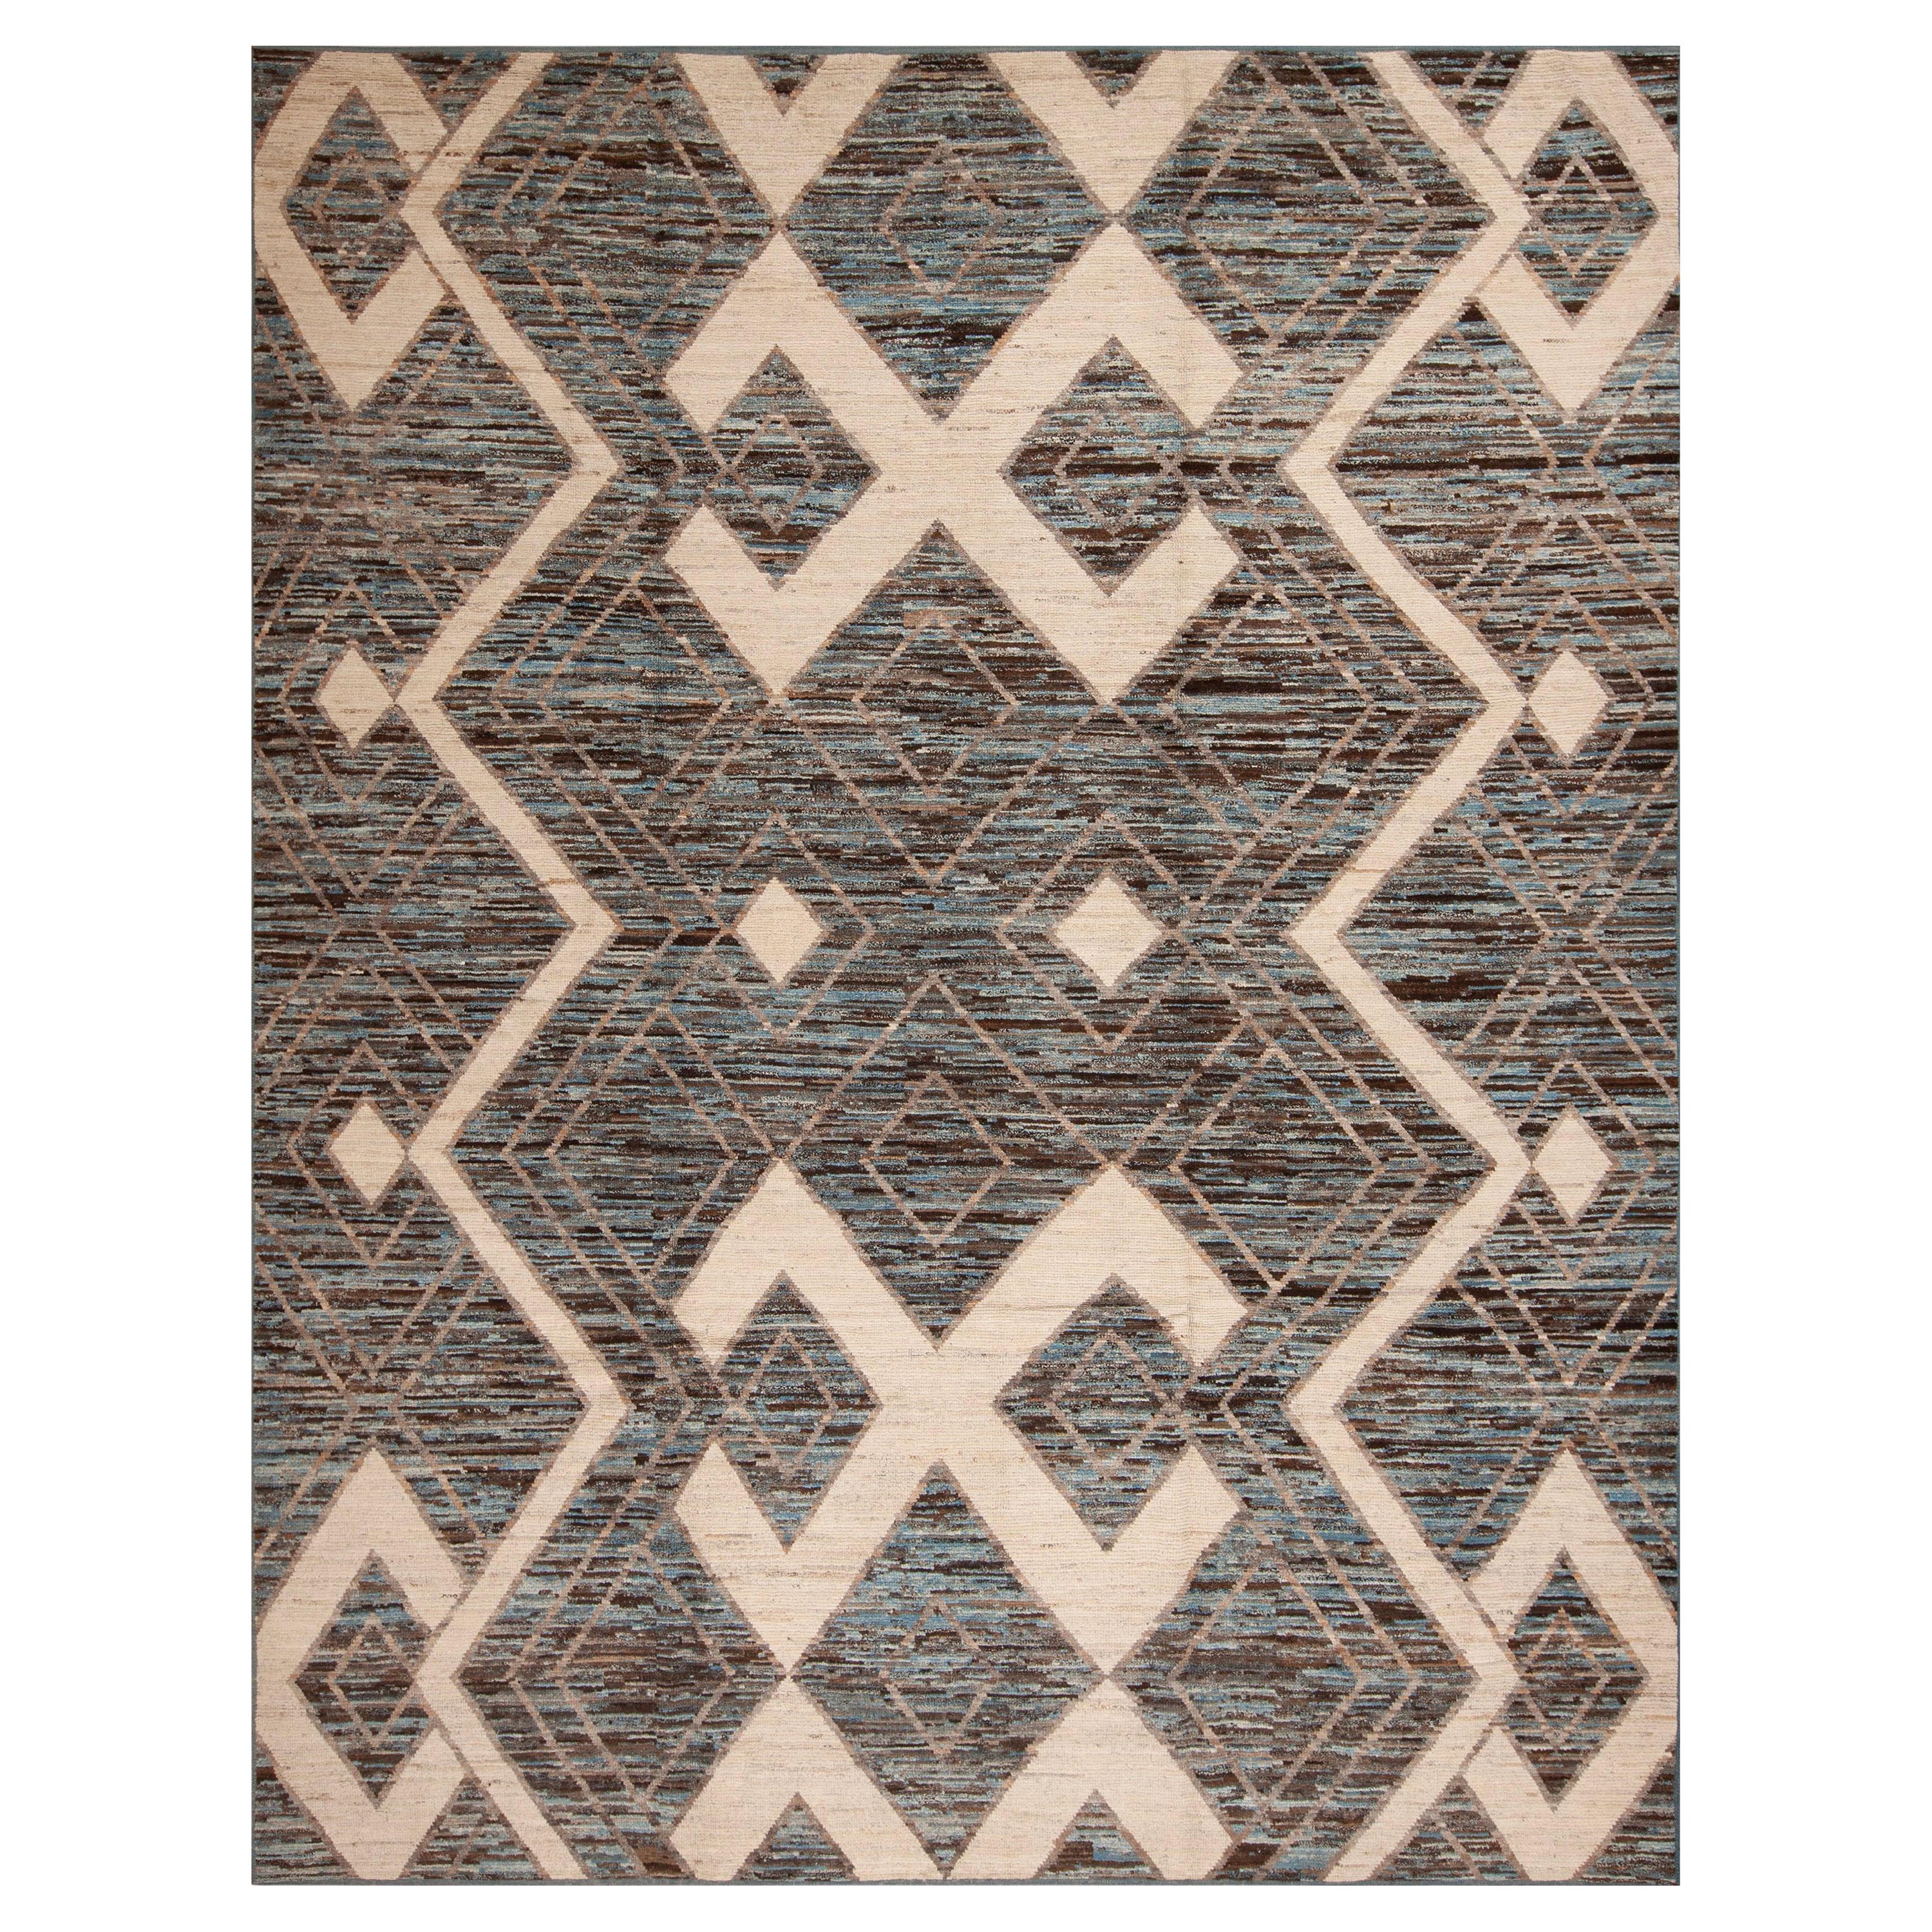 Collection Nazmiyal - Tapis géométrique tribal à fond terreux moderne 9'3" x 11'10"